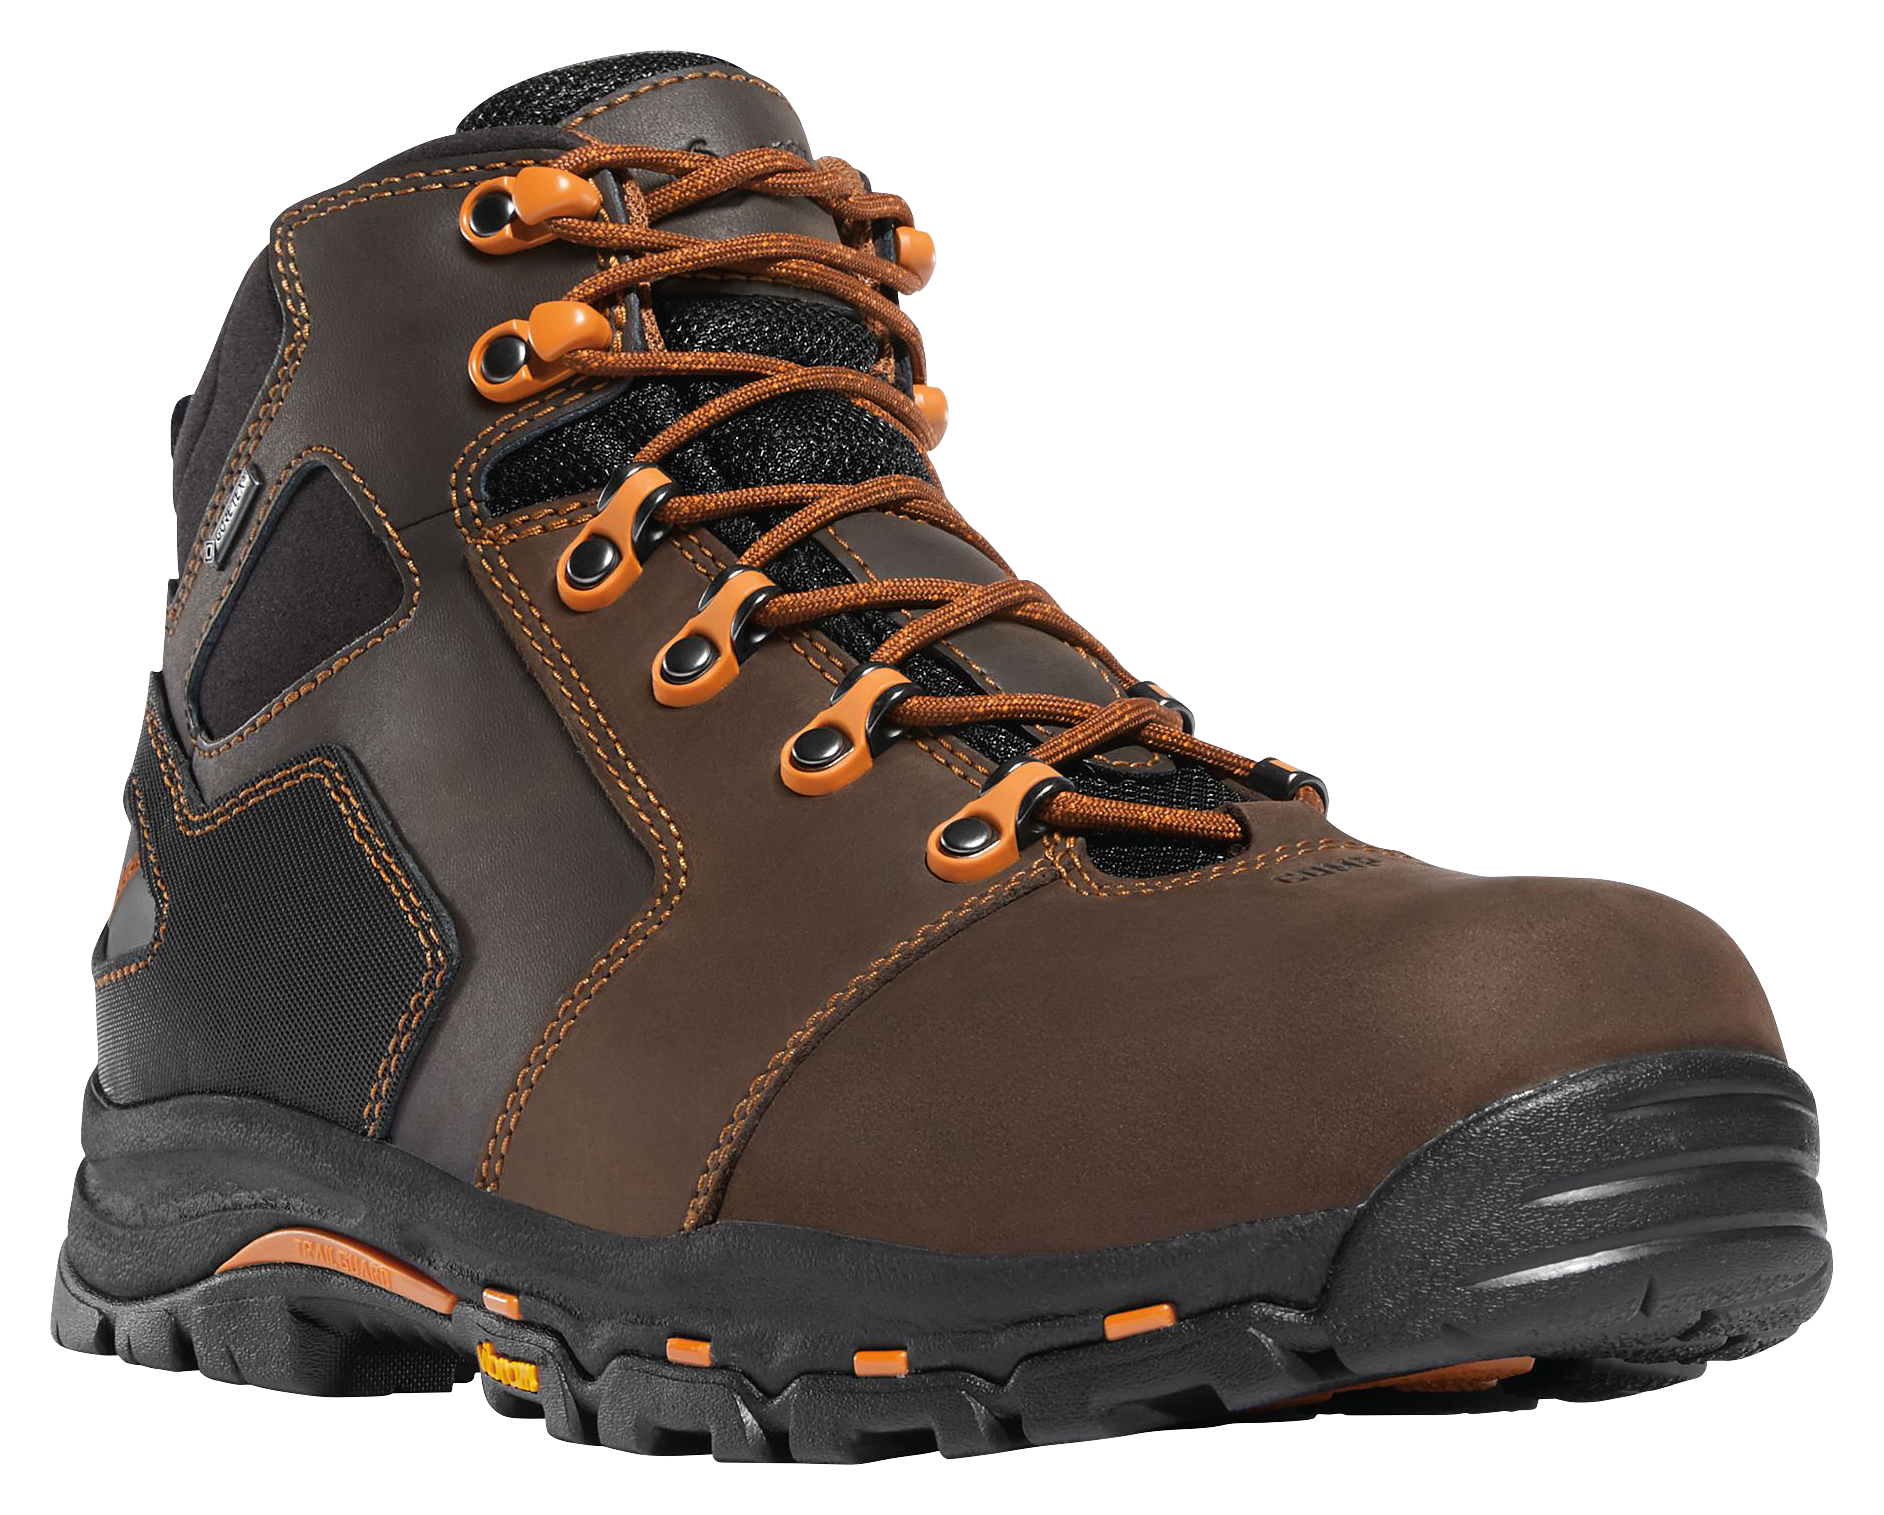 Danner Vicious 4.5'' GORE-TEX EH Work Boots for Men - Brown/Orange - 8.5W